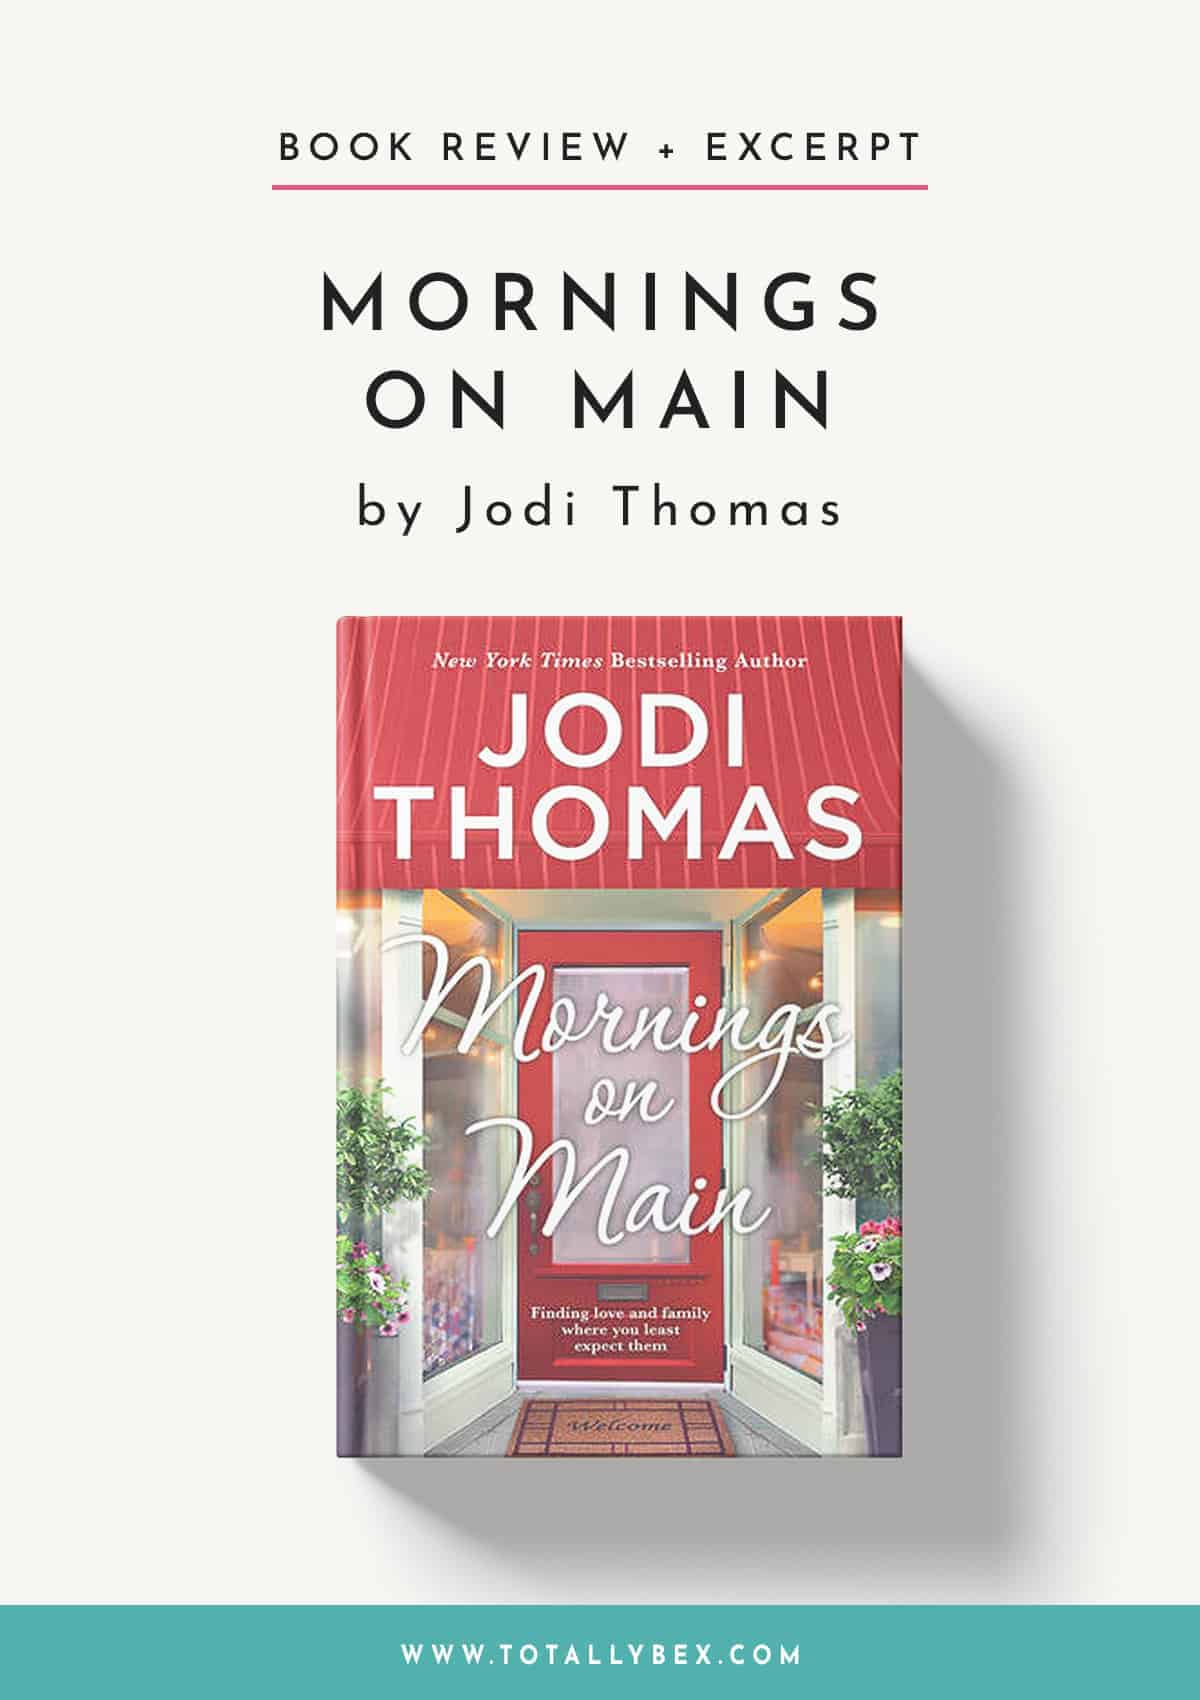 Mornings on Main by Jodi Thomas – A Sweet, Cozy Romance